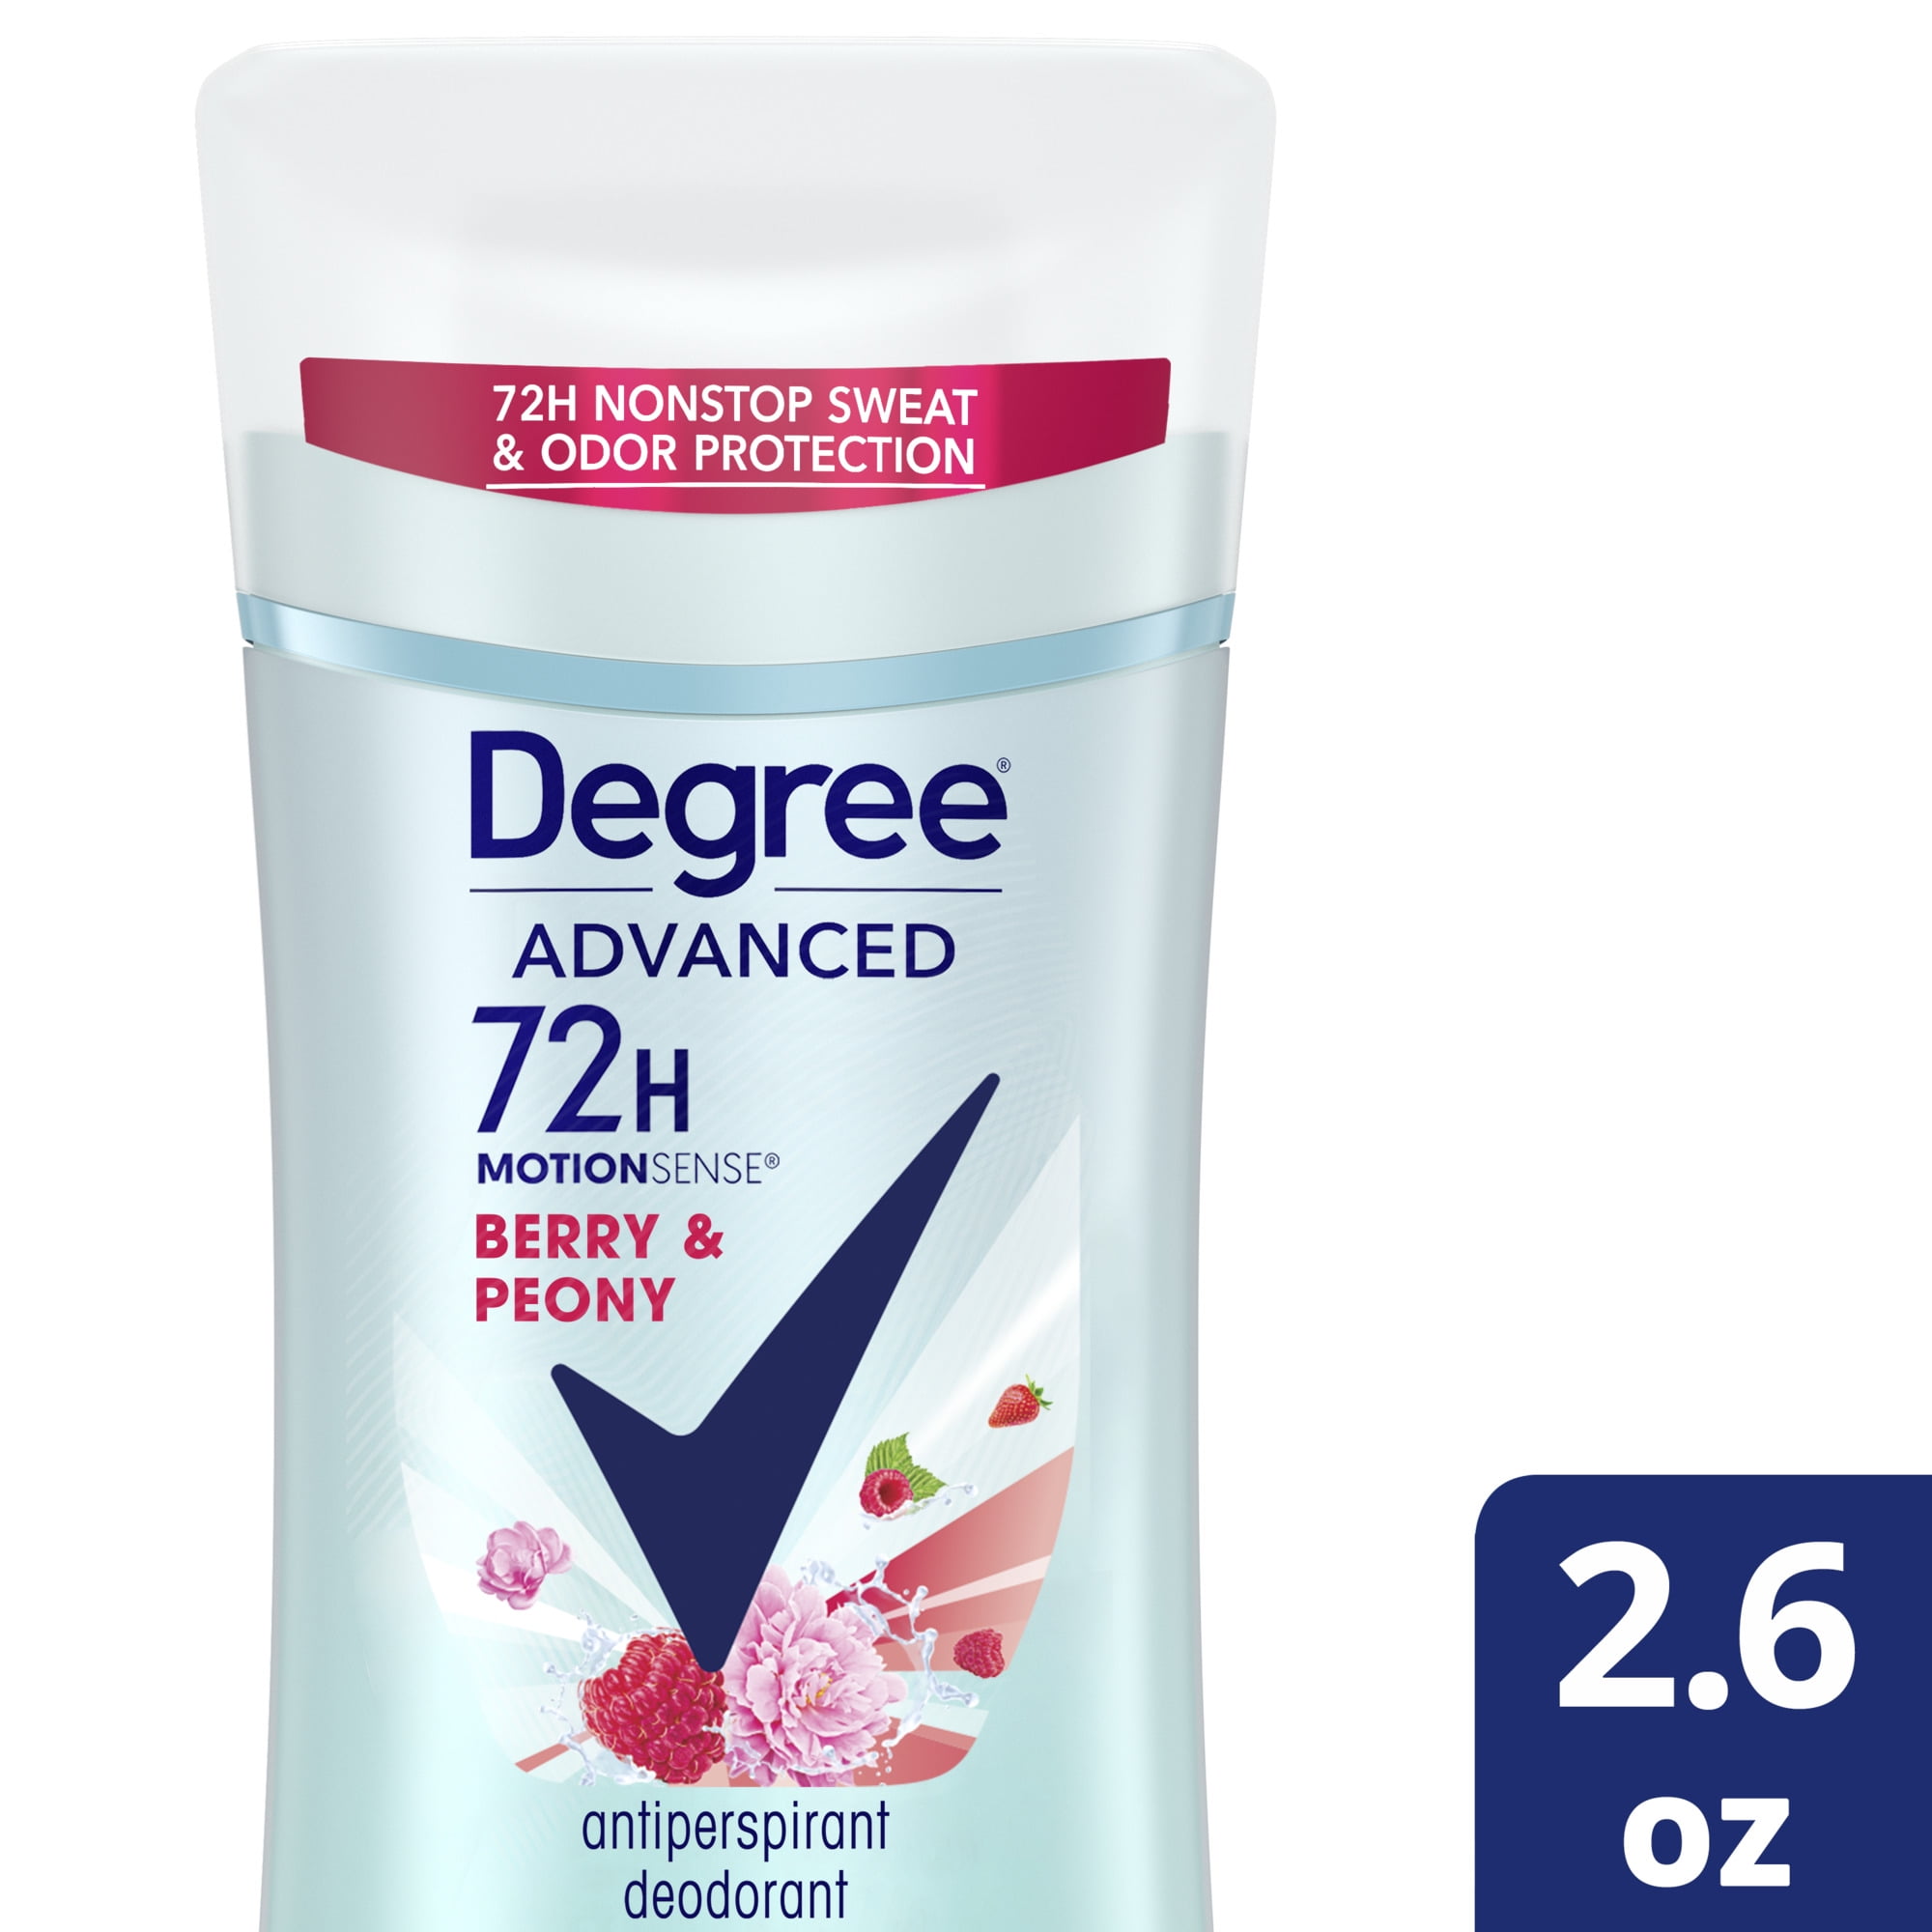 Degree Advanced 72H Motionsense Berry & Peony Antiperspirant Deodorant, 2.6 oz